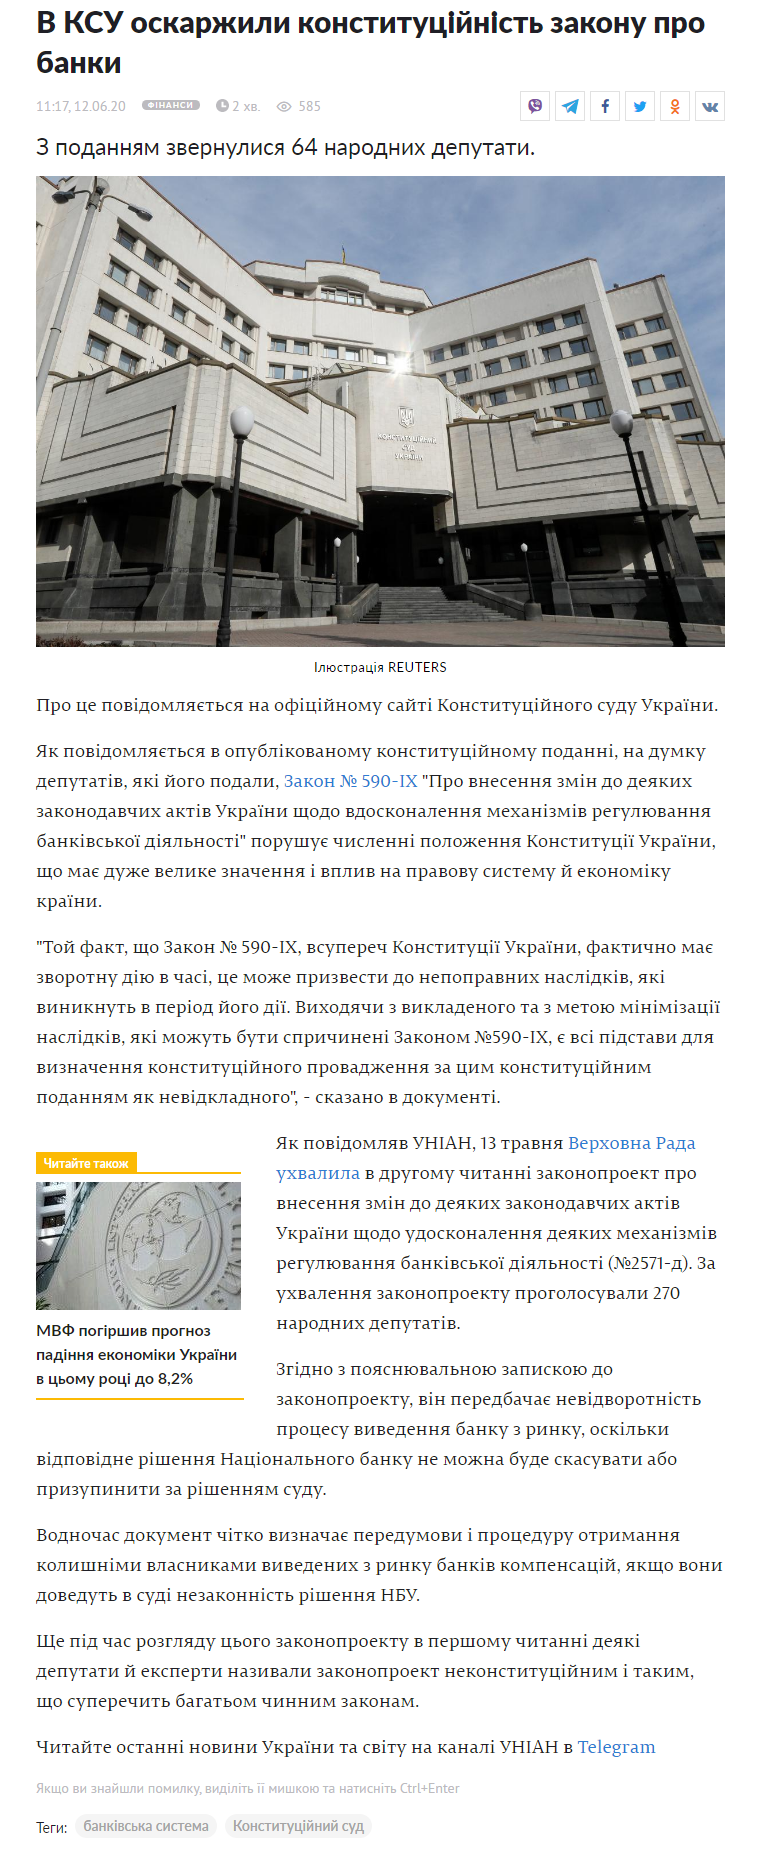 https://www.unian.ua/economics/finance/bankivskiy-zakon-u-ksu-oskarzhili-konstituciynist-zakonu-pro-banki-novini-ukrajina-11033330.html